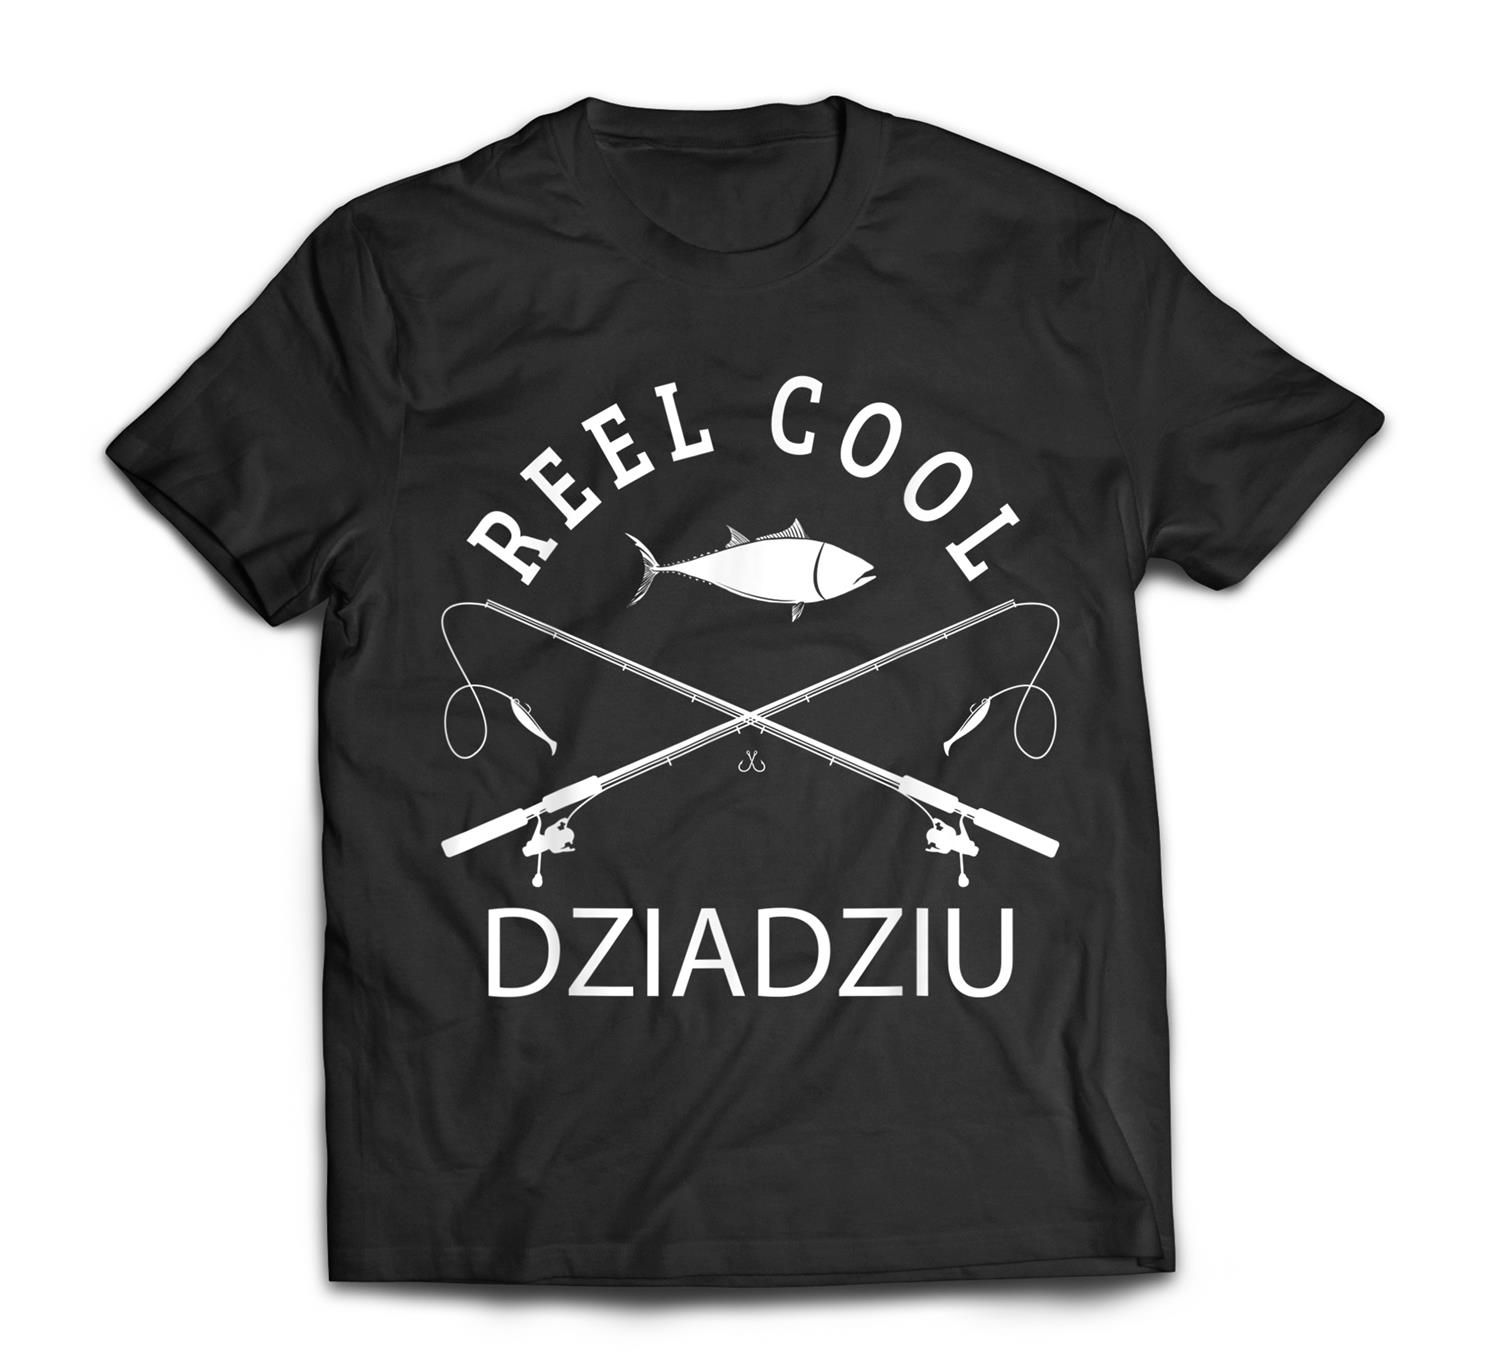 Mens Reel Cool Dziadziu Fishing Polish Grandpa Father’S Day Gift T-Shirt